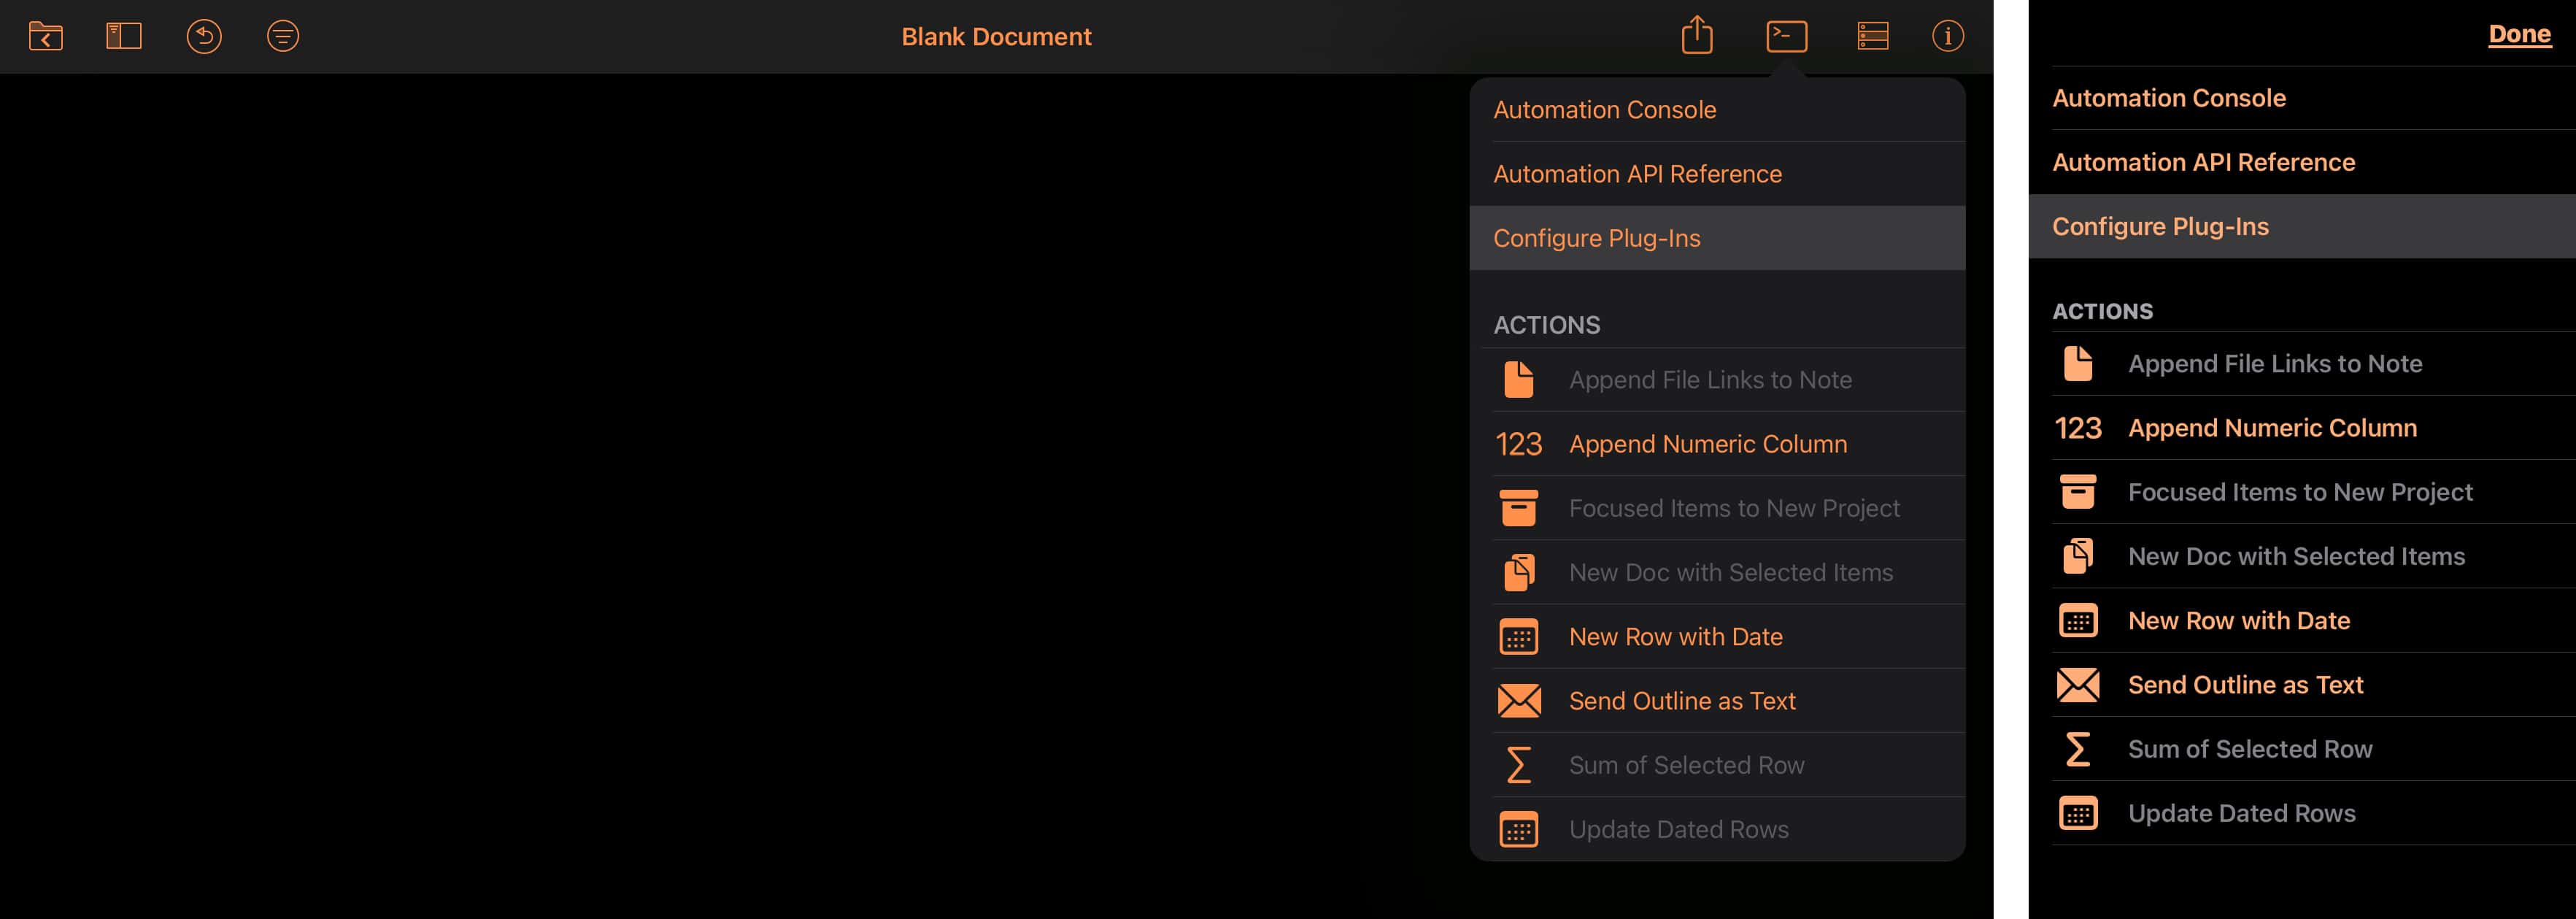 OmniOutliner Automation Menu on iPadOS and iOS